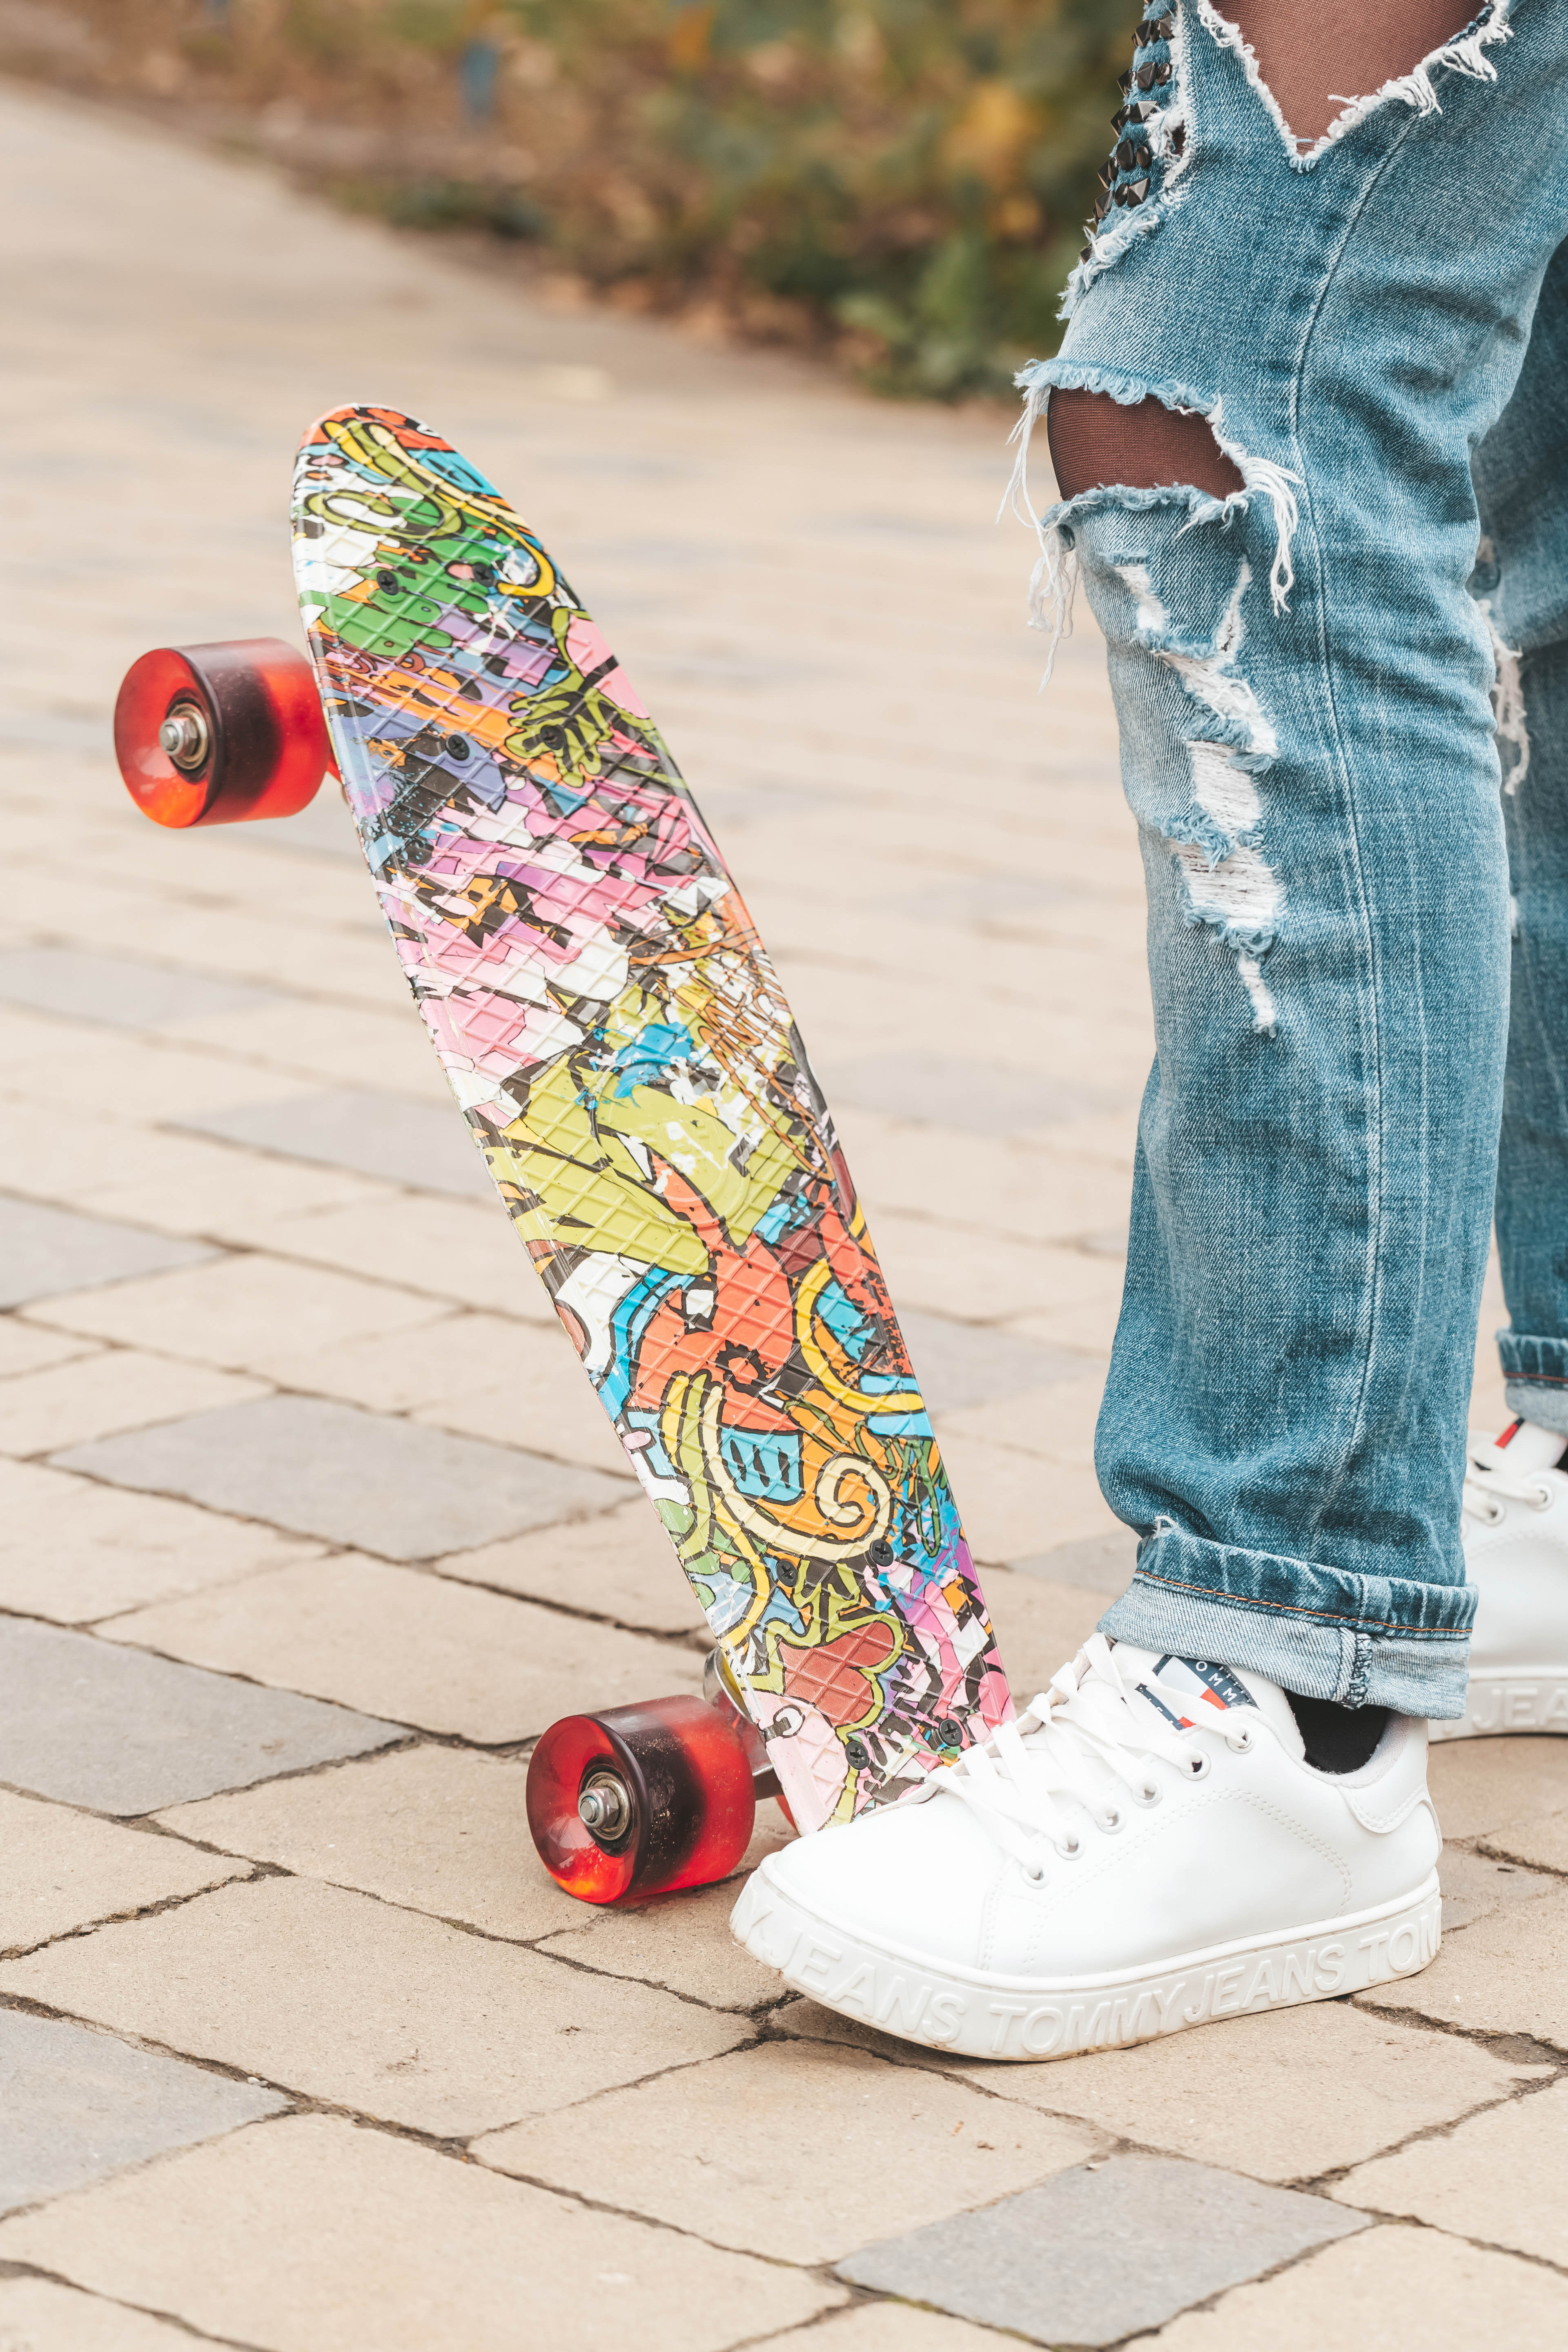 sports, legs, style, skateboard, skate